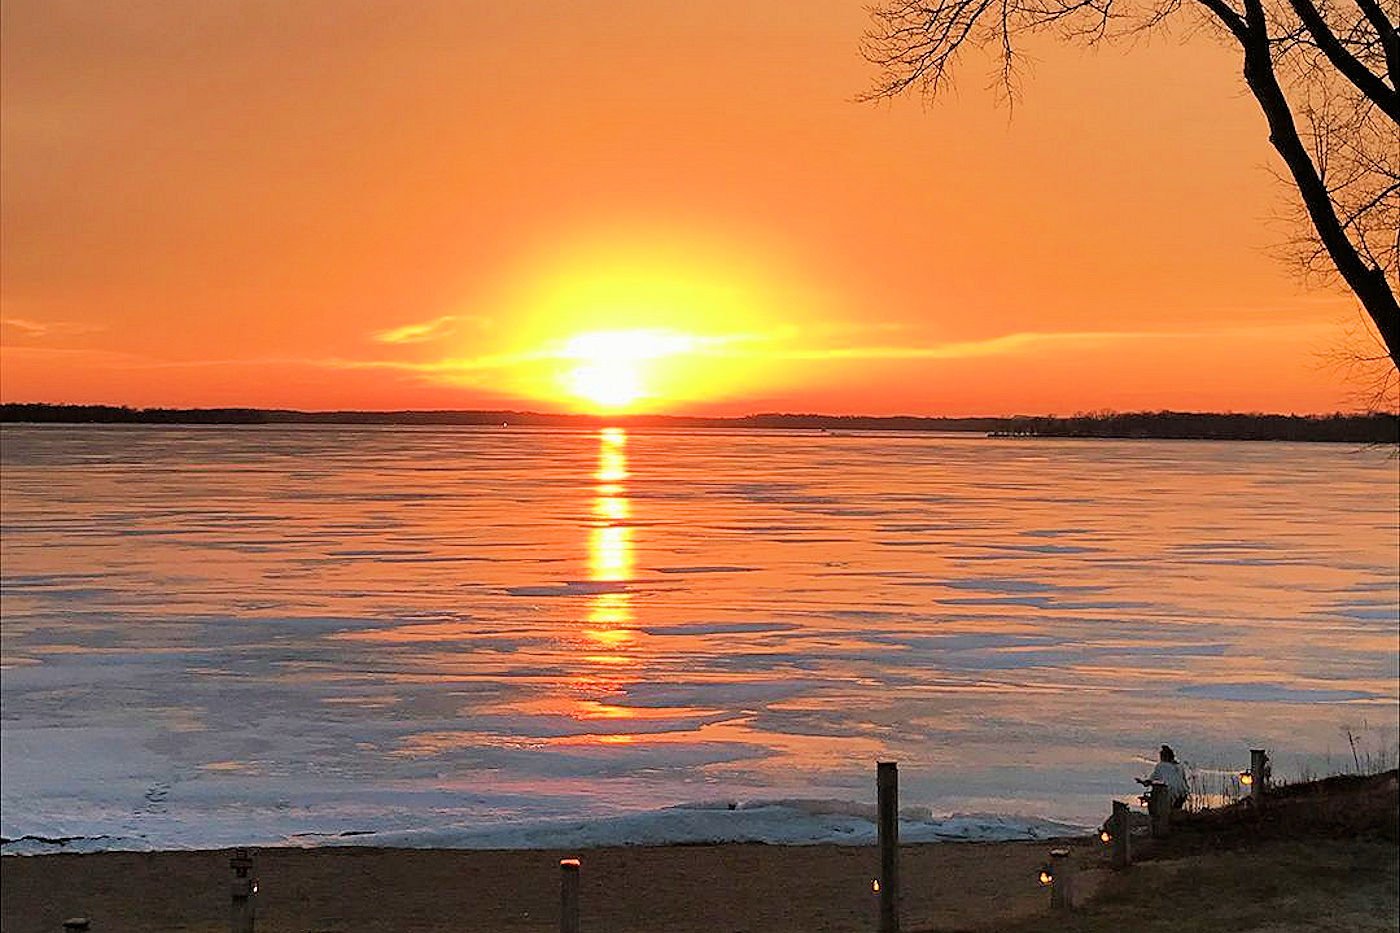 March 4, 2017 Big Detroit Lake Sunset at The Lodge on Lake Detroit